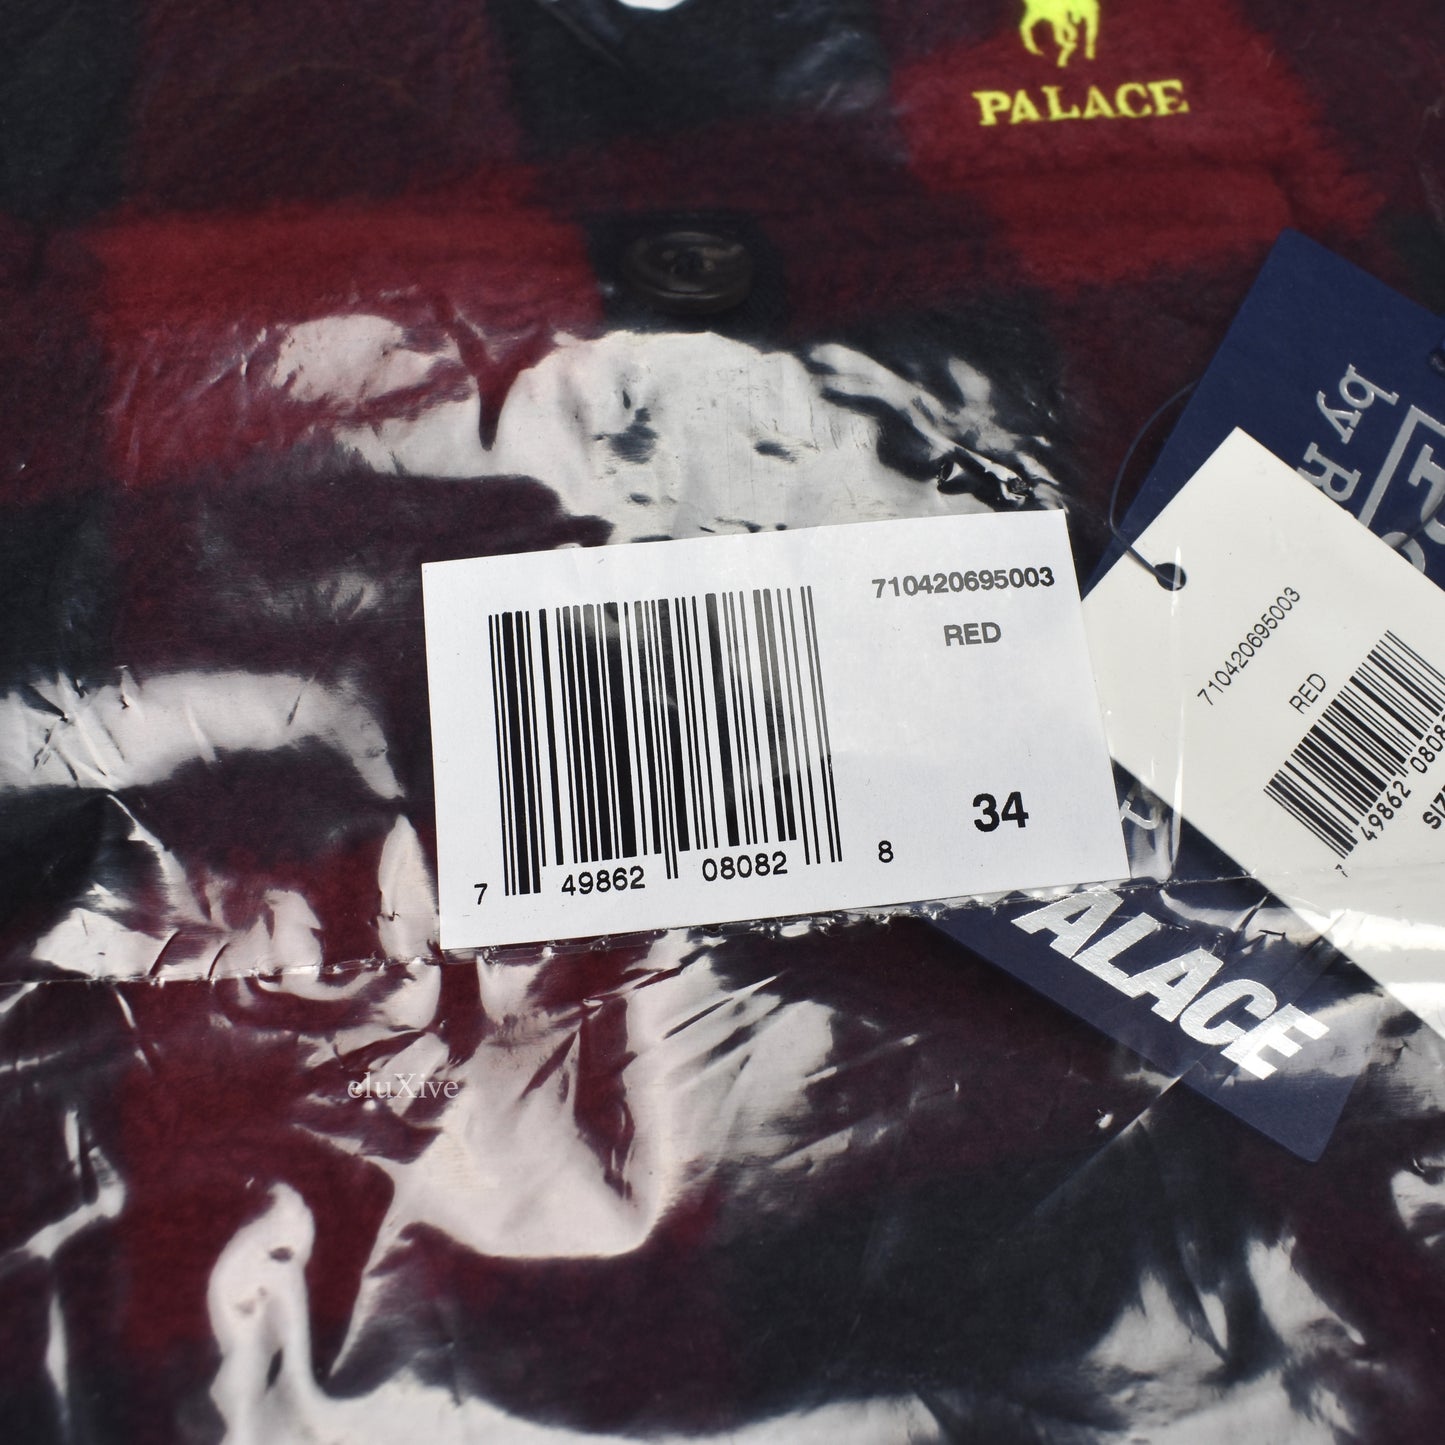 Palace x Ralph Lauren - Buffalo Plaid Fleece Pants